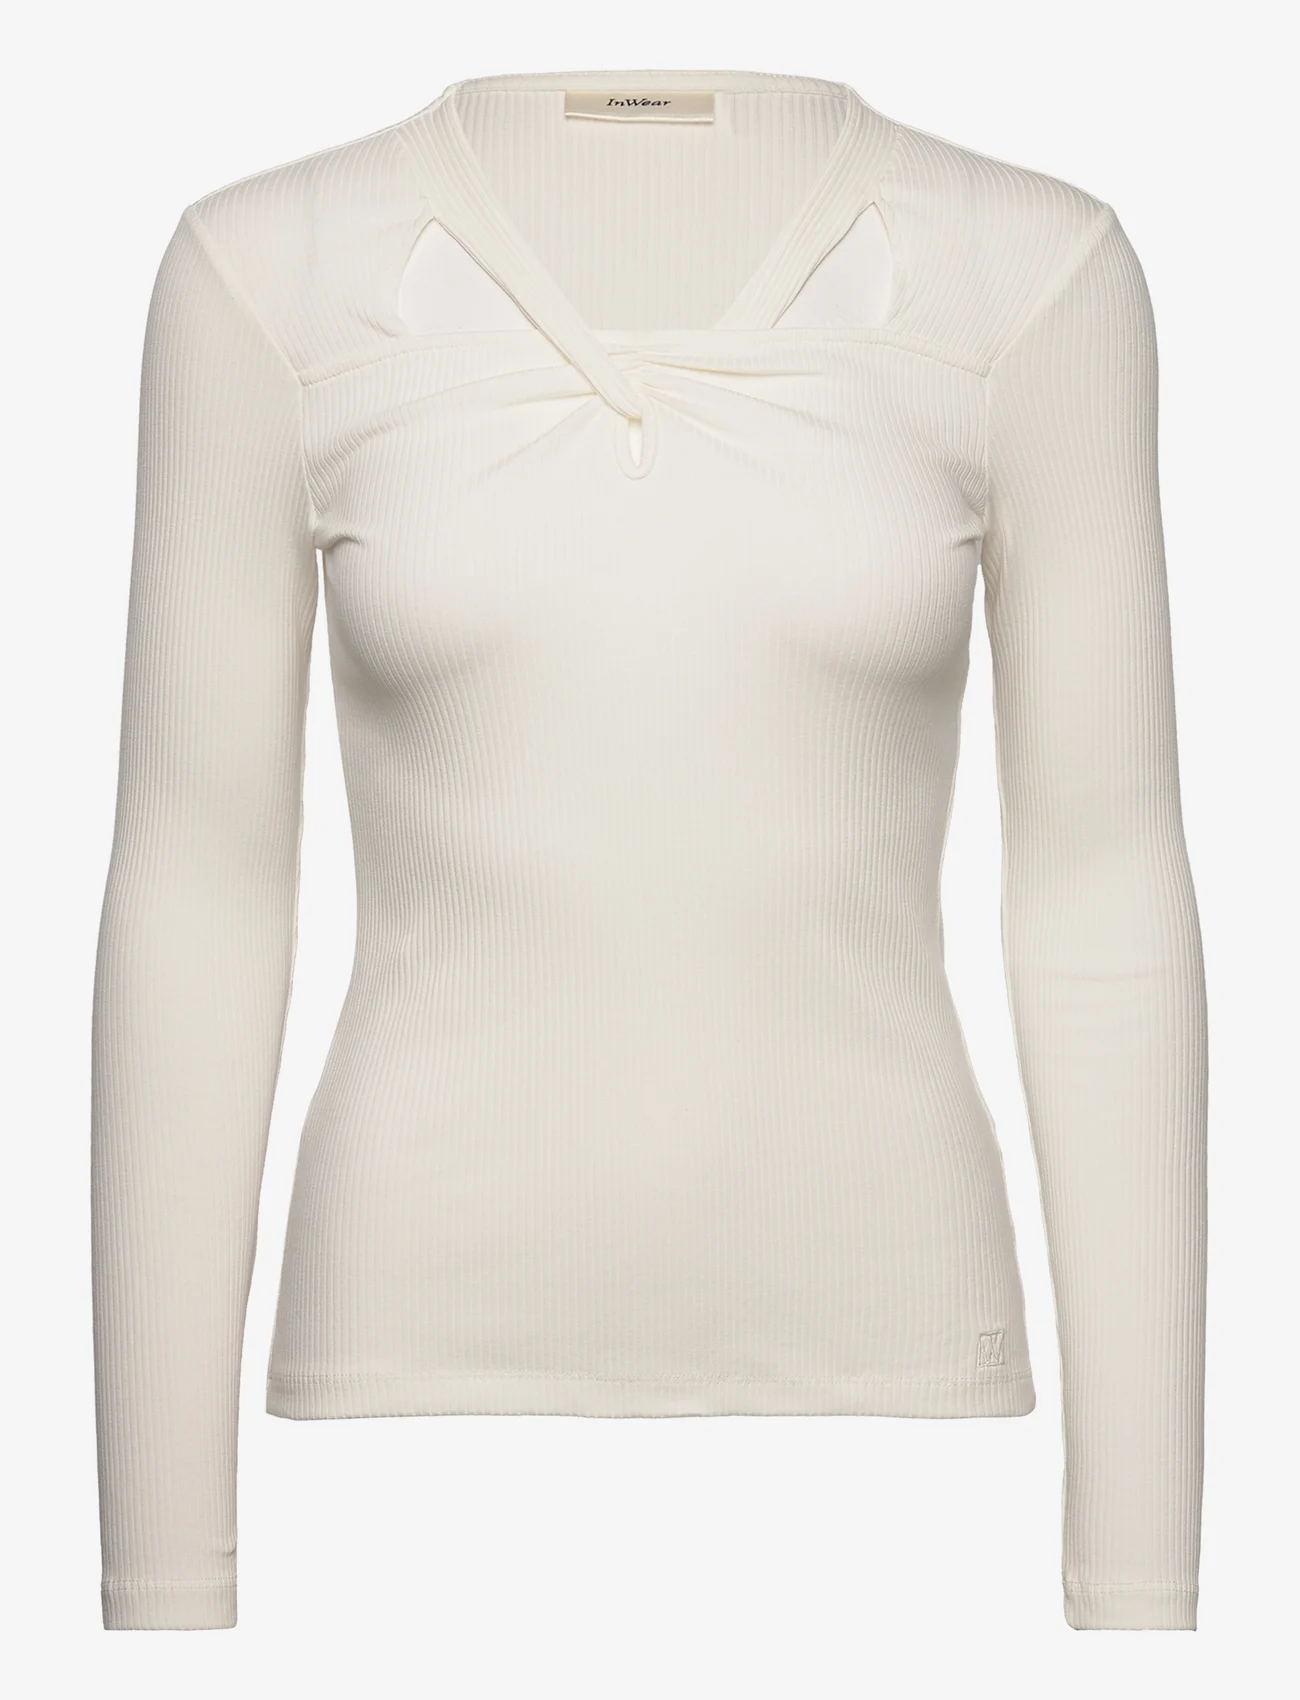 InWear - PukIW Long Sleeve - långärmade skjortor - whisper white - 0